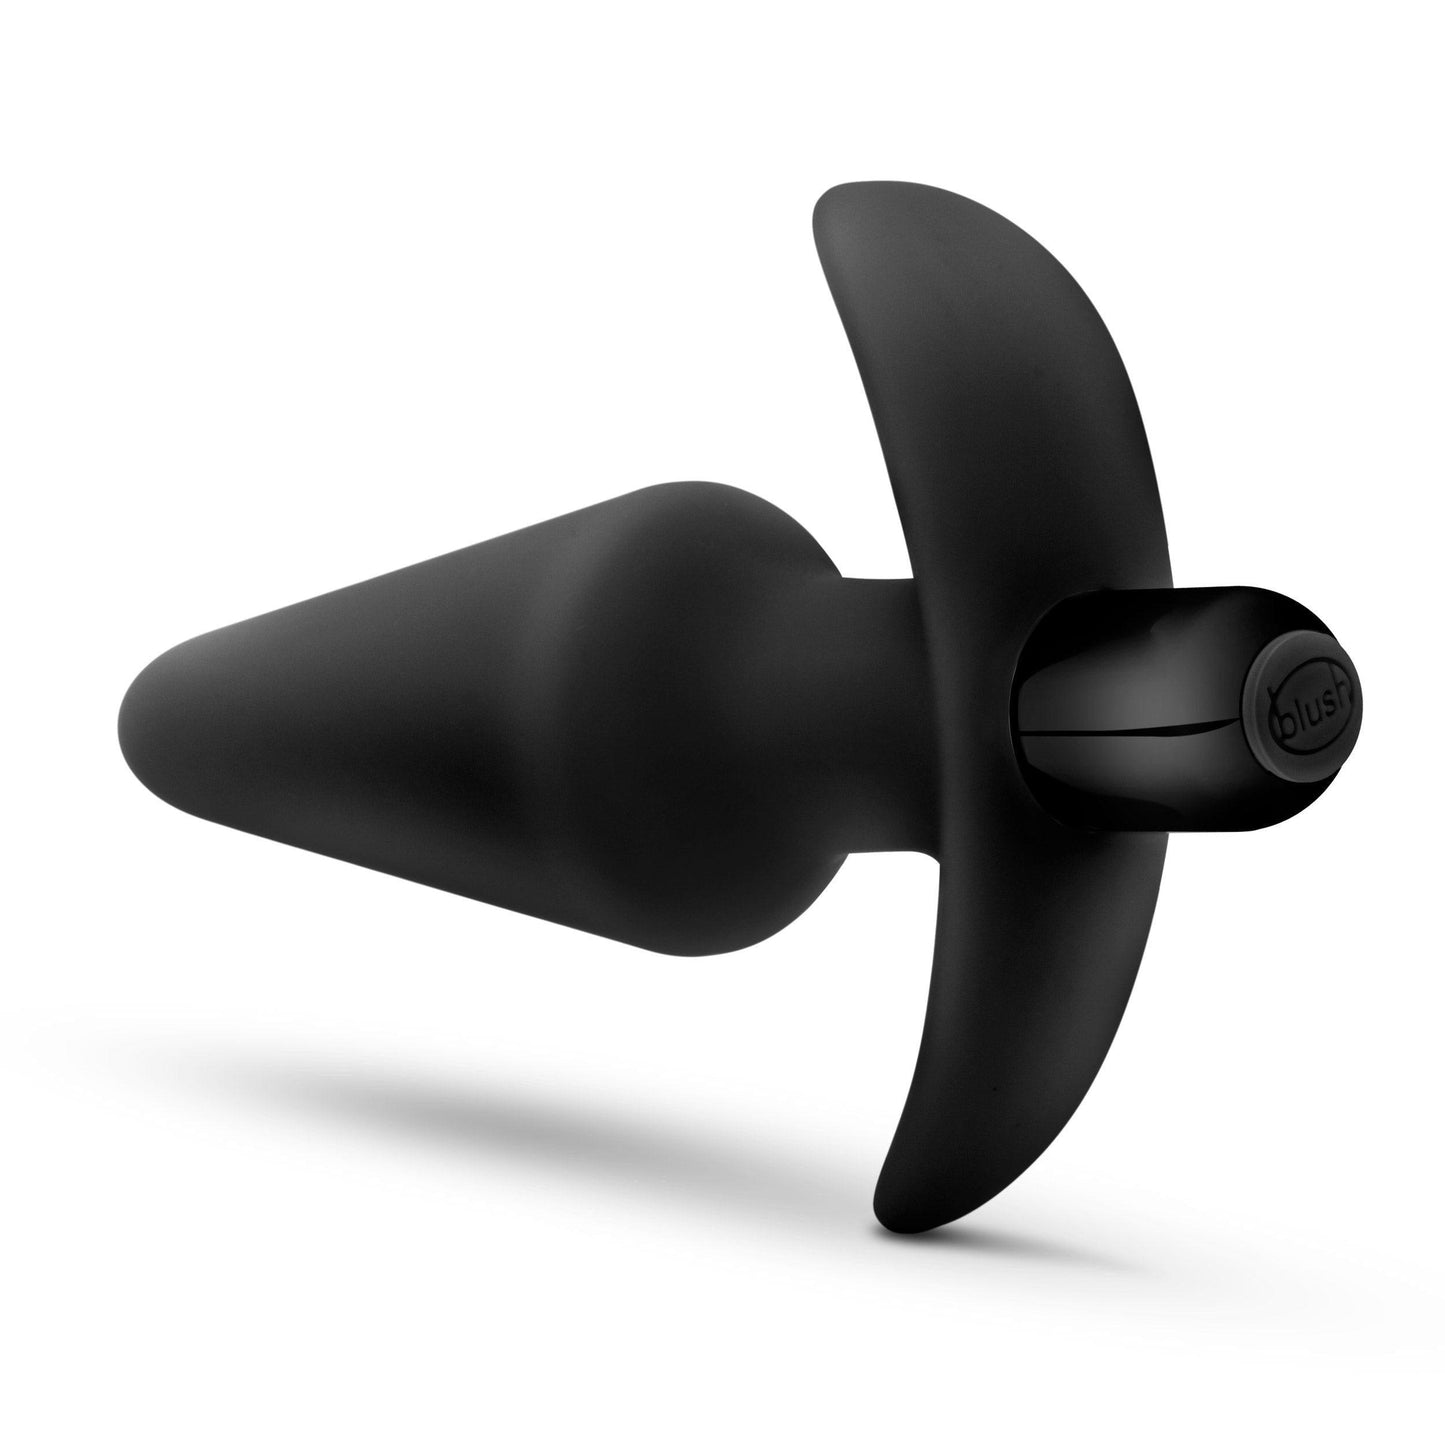 Anal Adventures Platinum - Silicone Vibrating Plug - Black - My Sex Toy Hub